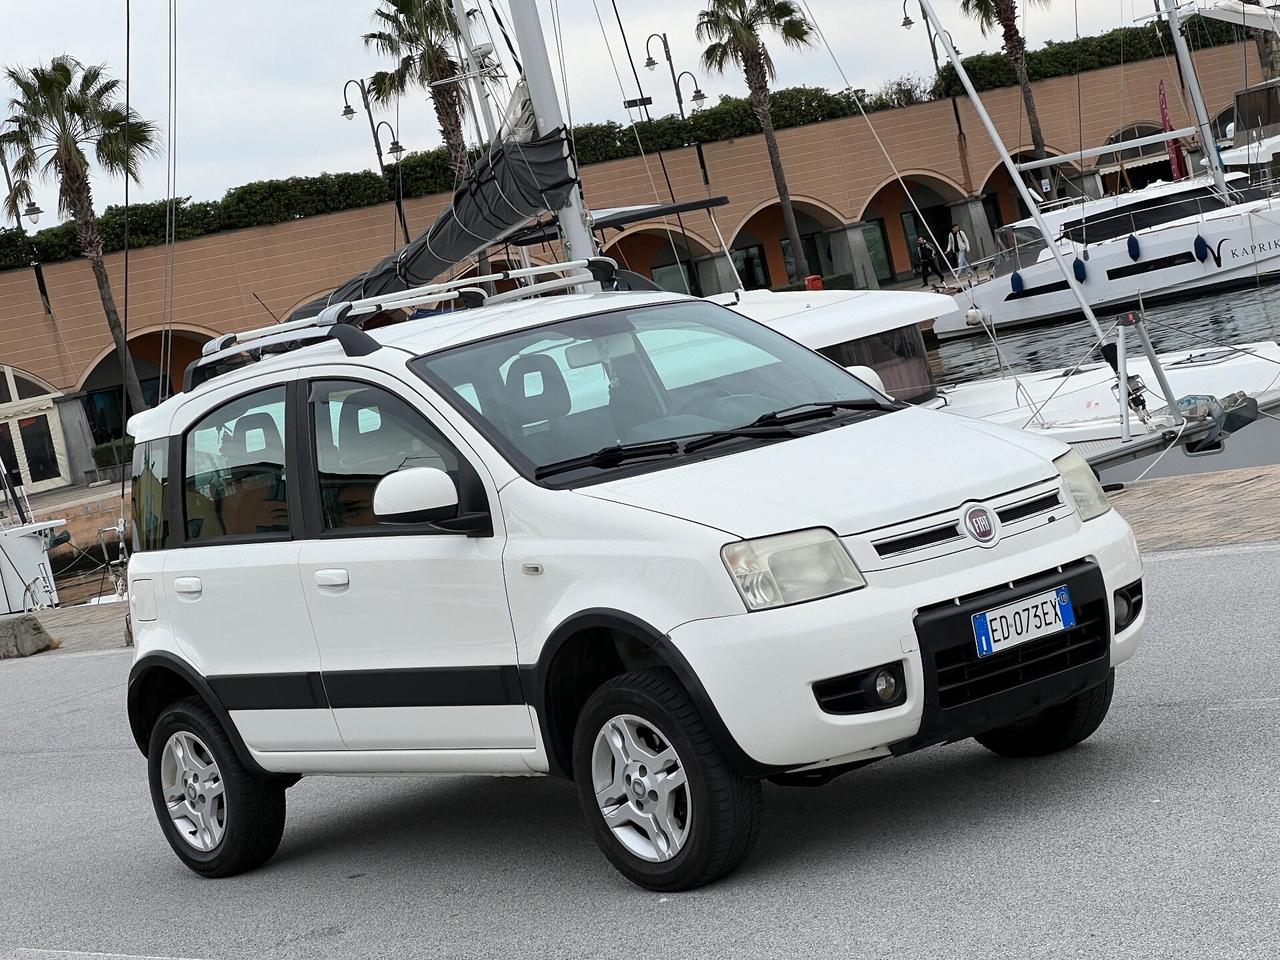 Fiat Panda 1.3 MJT -69 CV- 4x4 -GARANZIA 12 MESI